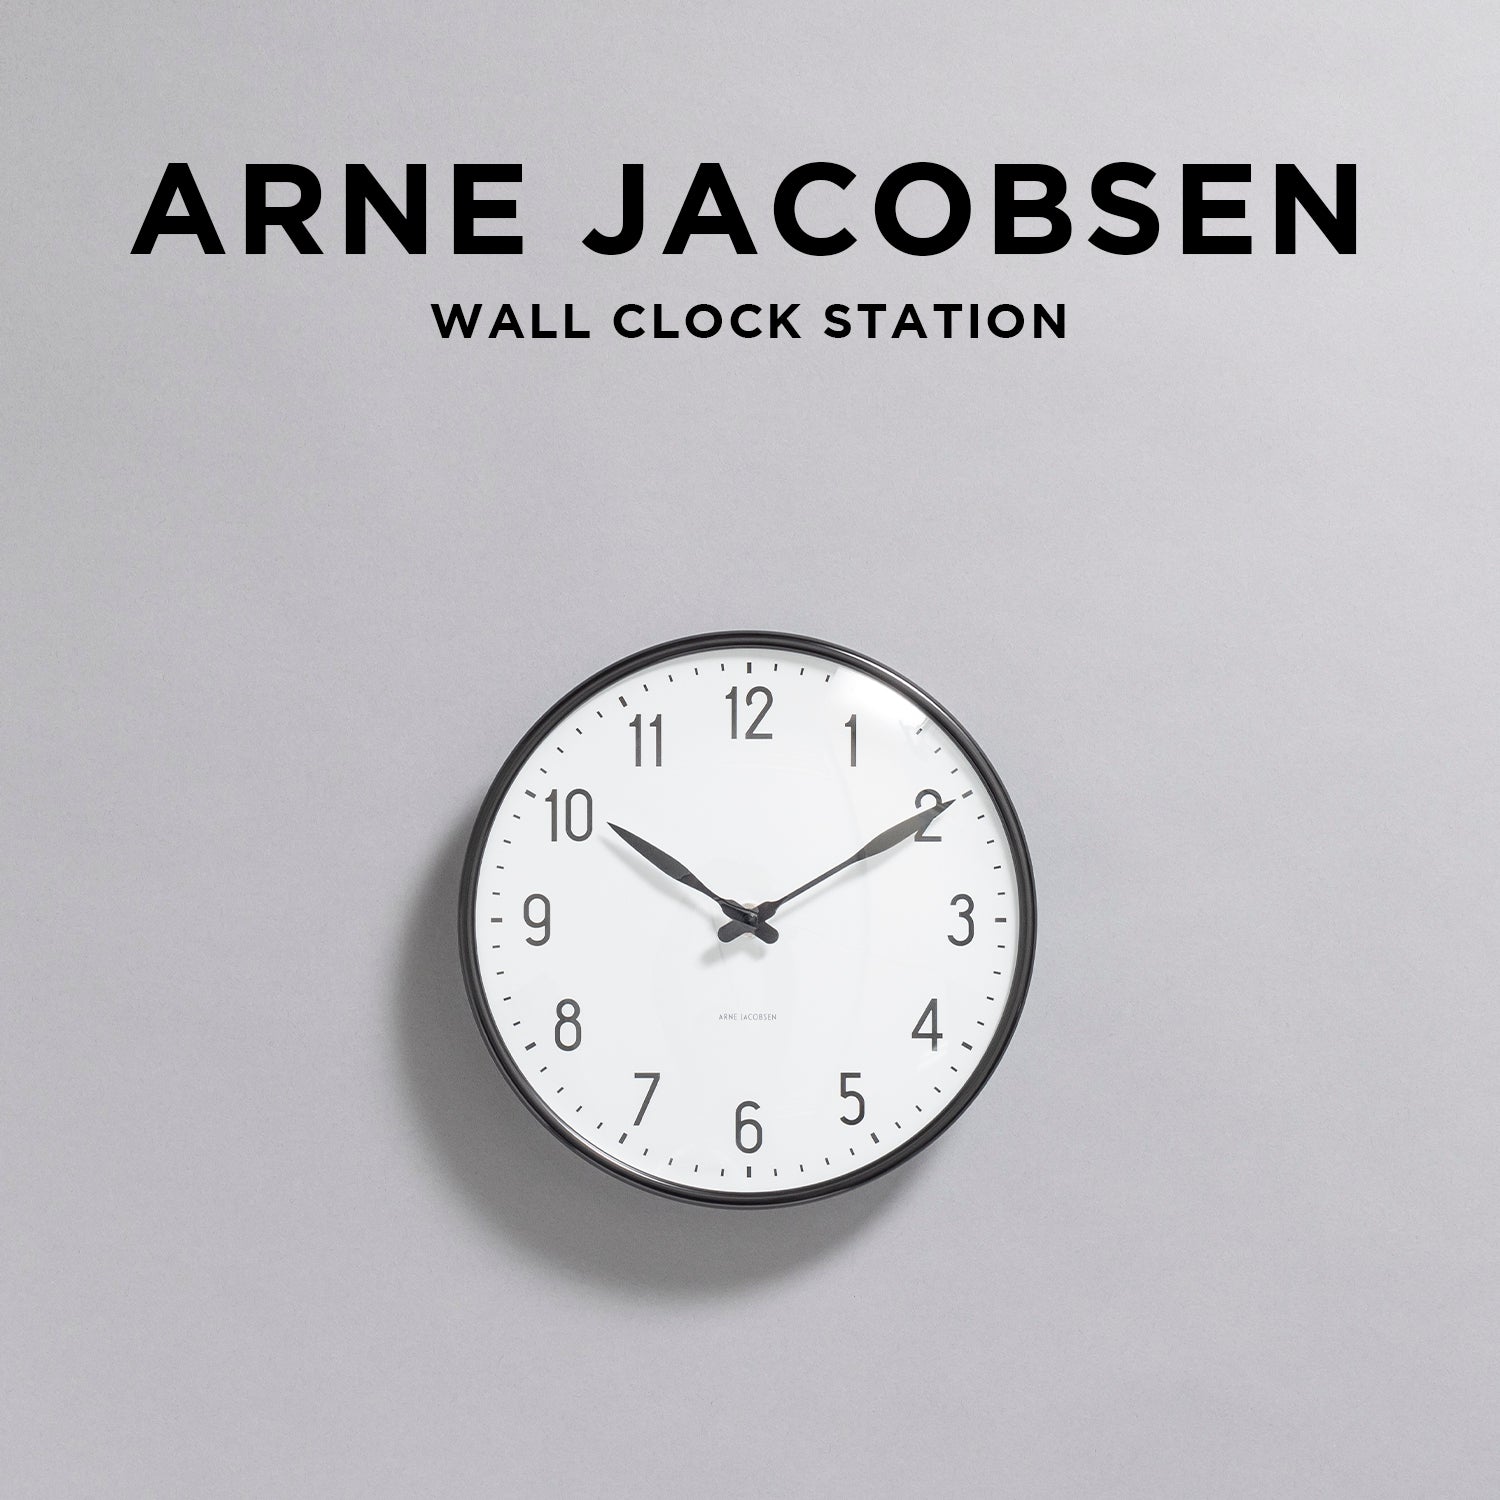 Arne Jacobsen Wall Clock Station.